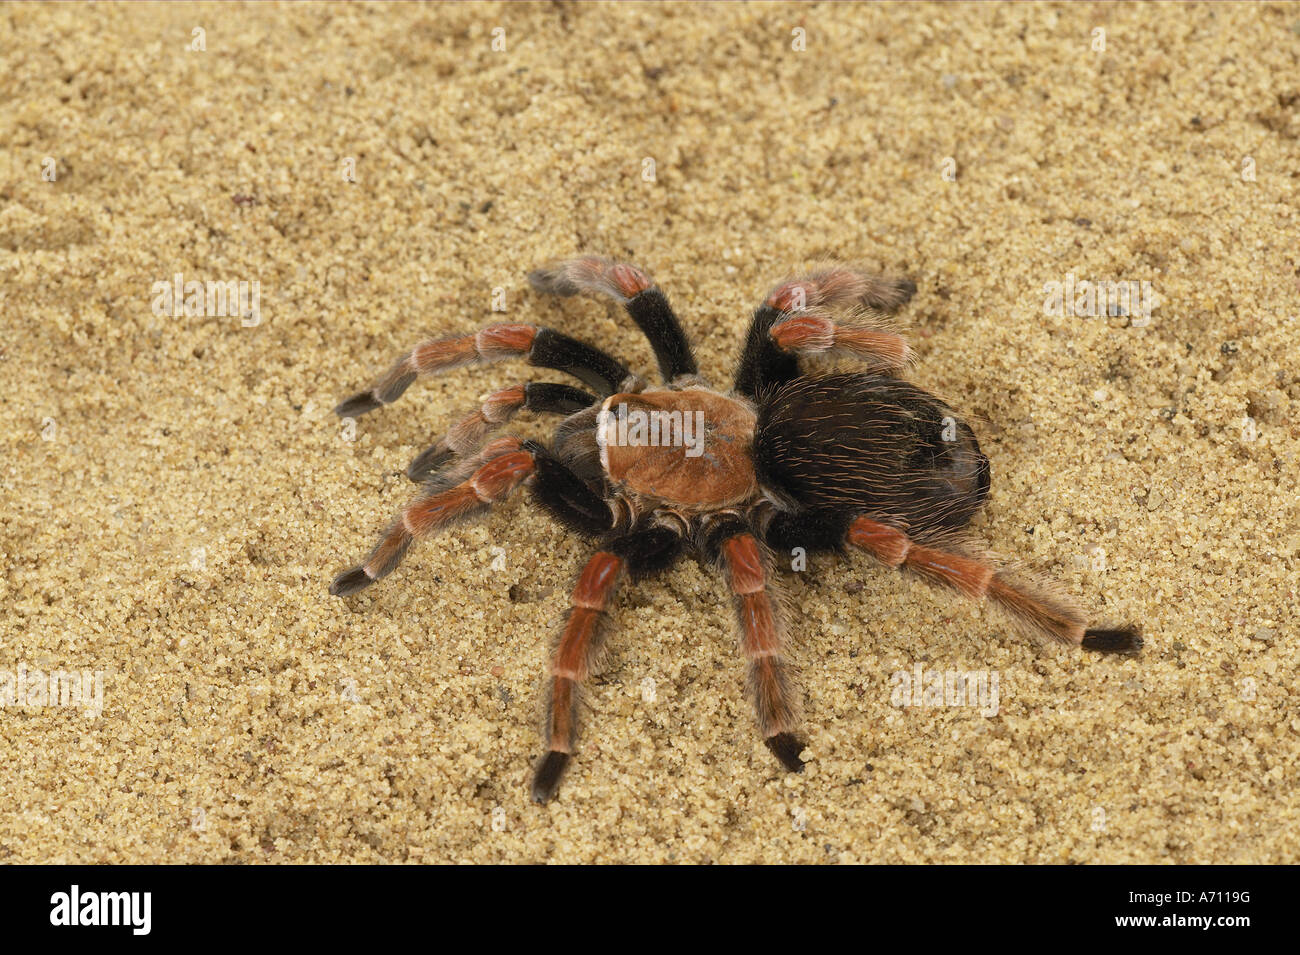 Mexican Fireleg Tarantula (Brachypelma boehmei, Euathlus boehmi) on sand Stock Photo